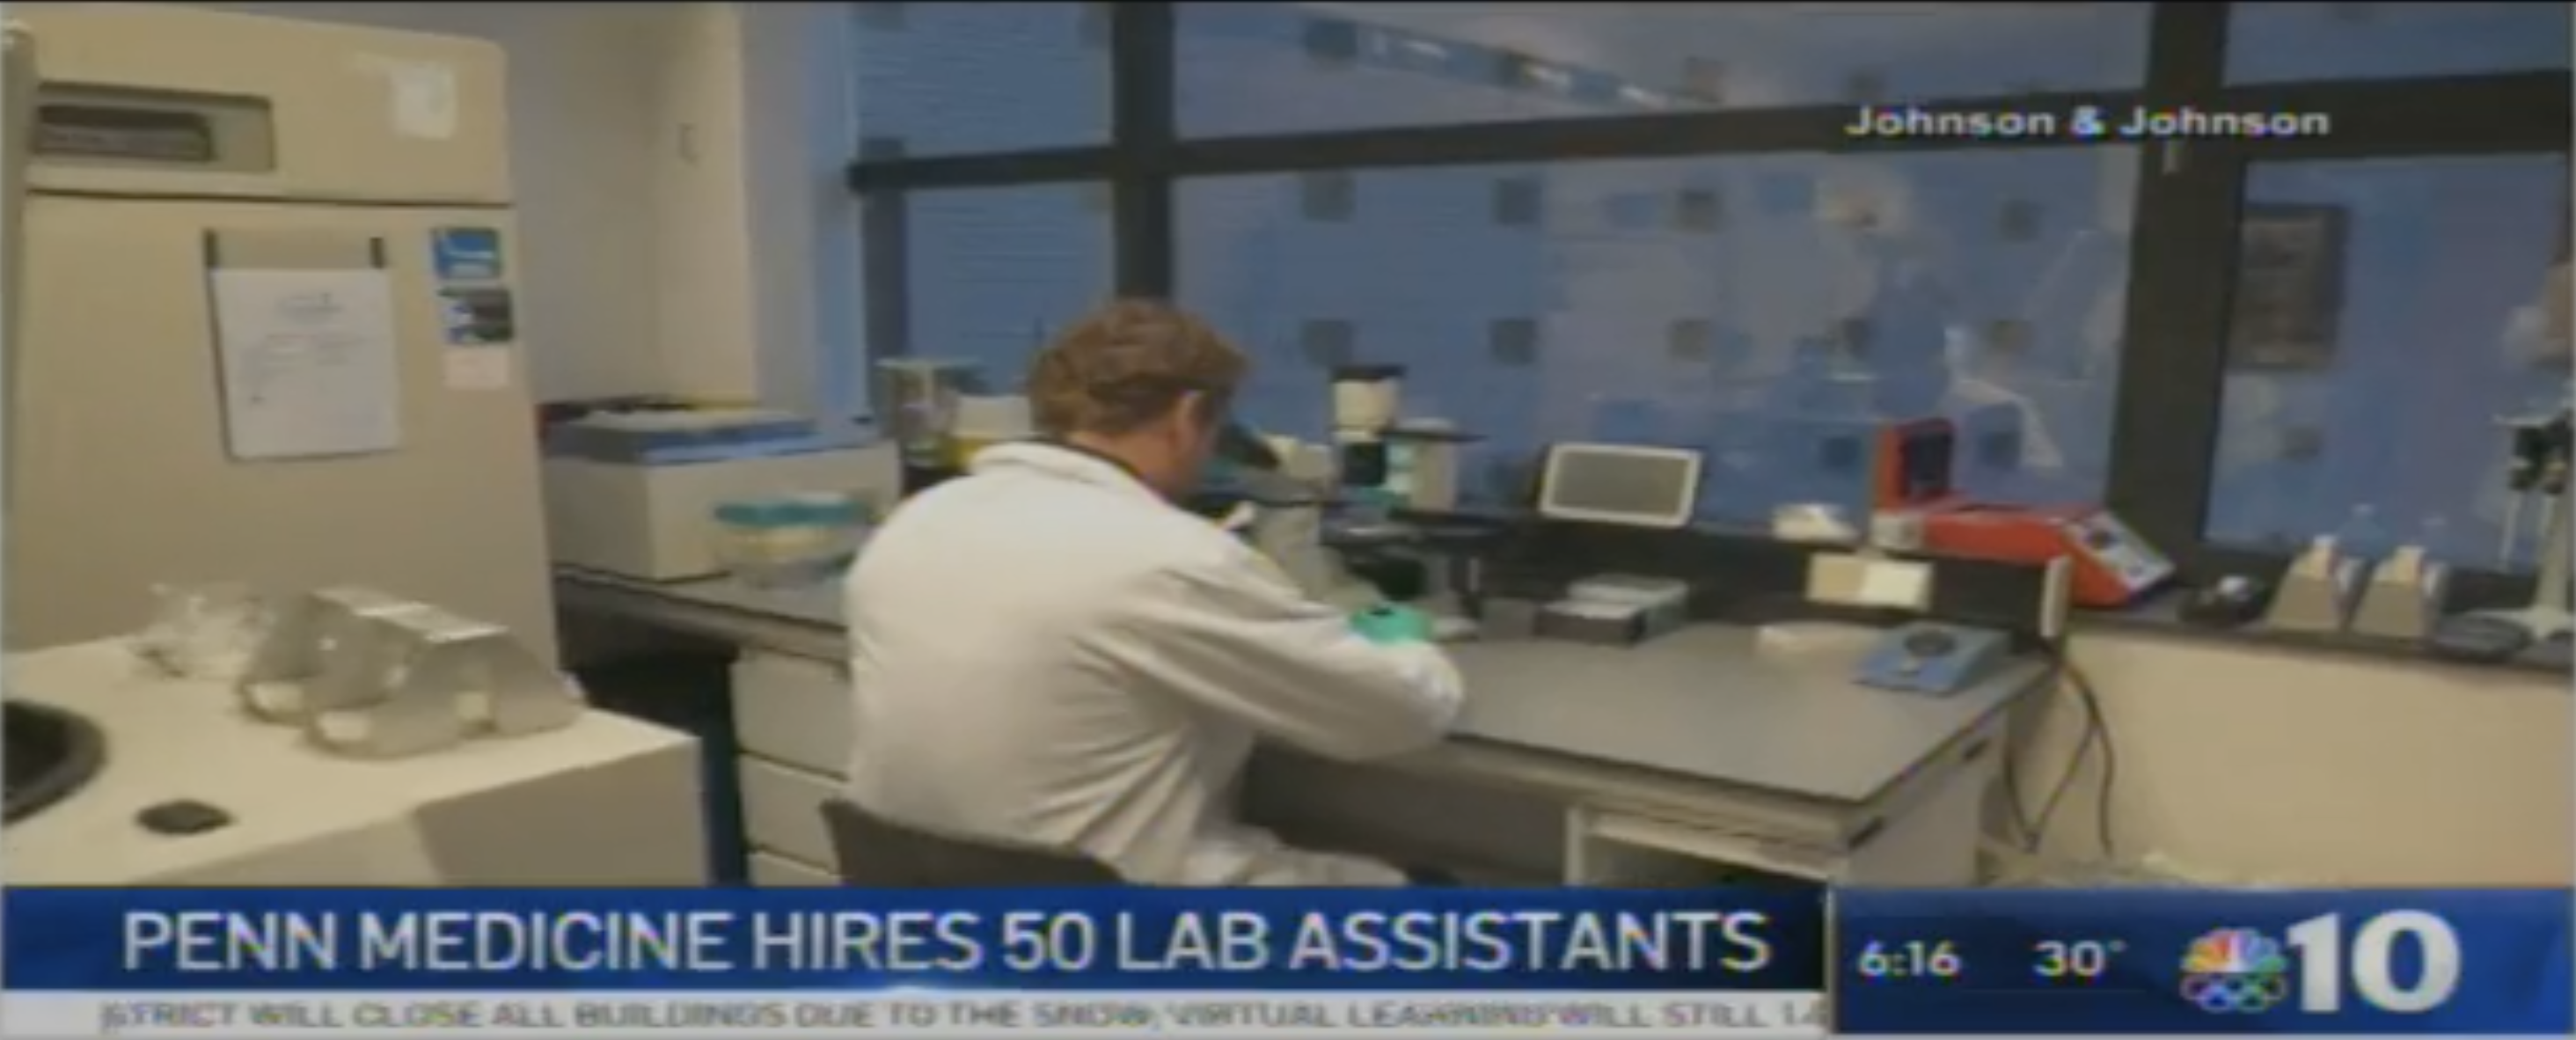 The West Philadelphia Skills Initiative (WPSI) | Penn Medicine hires 50 lab assistants